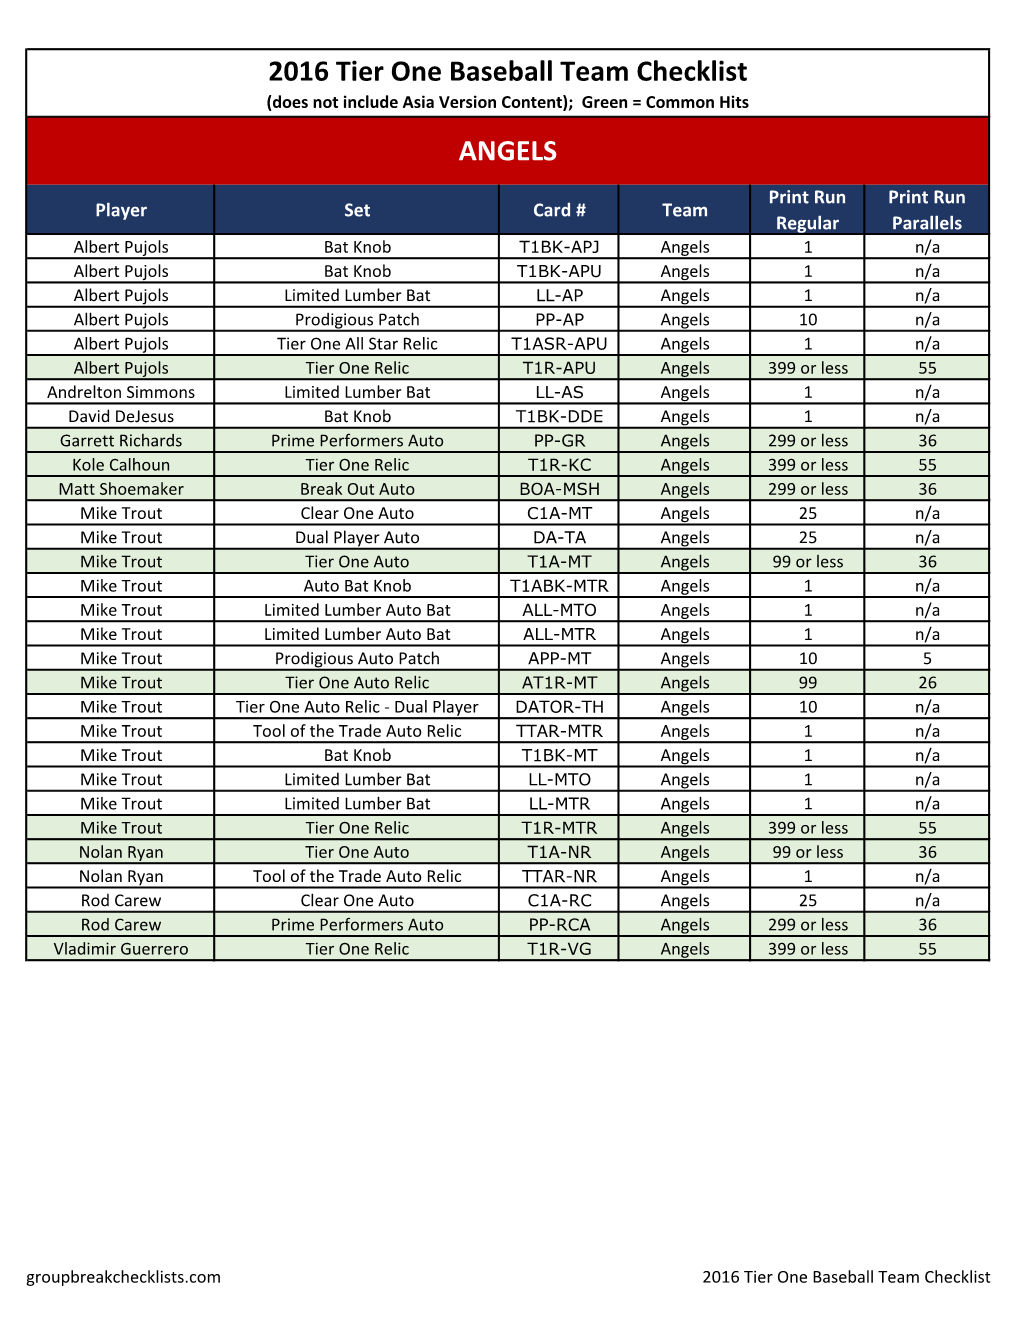 2016 Topps Tier One Baseball Team Checklist;